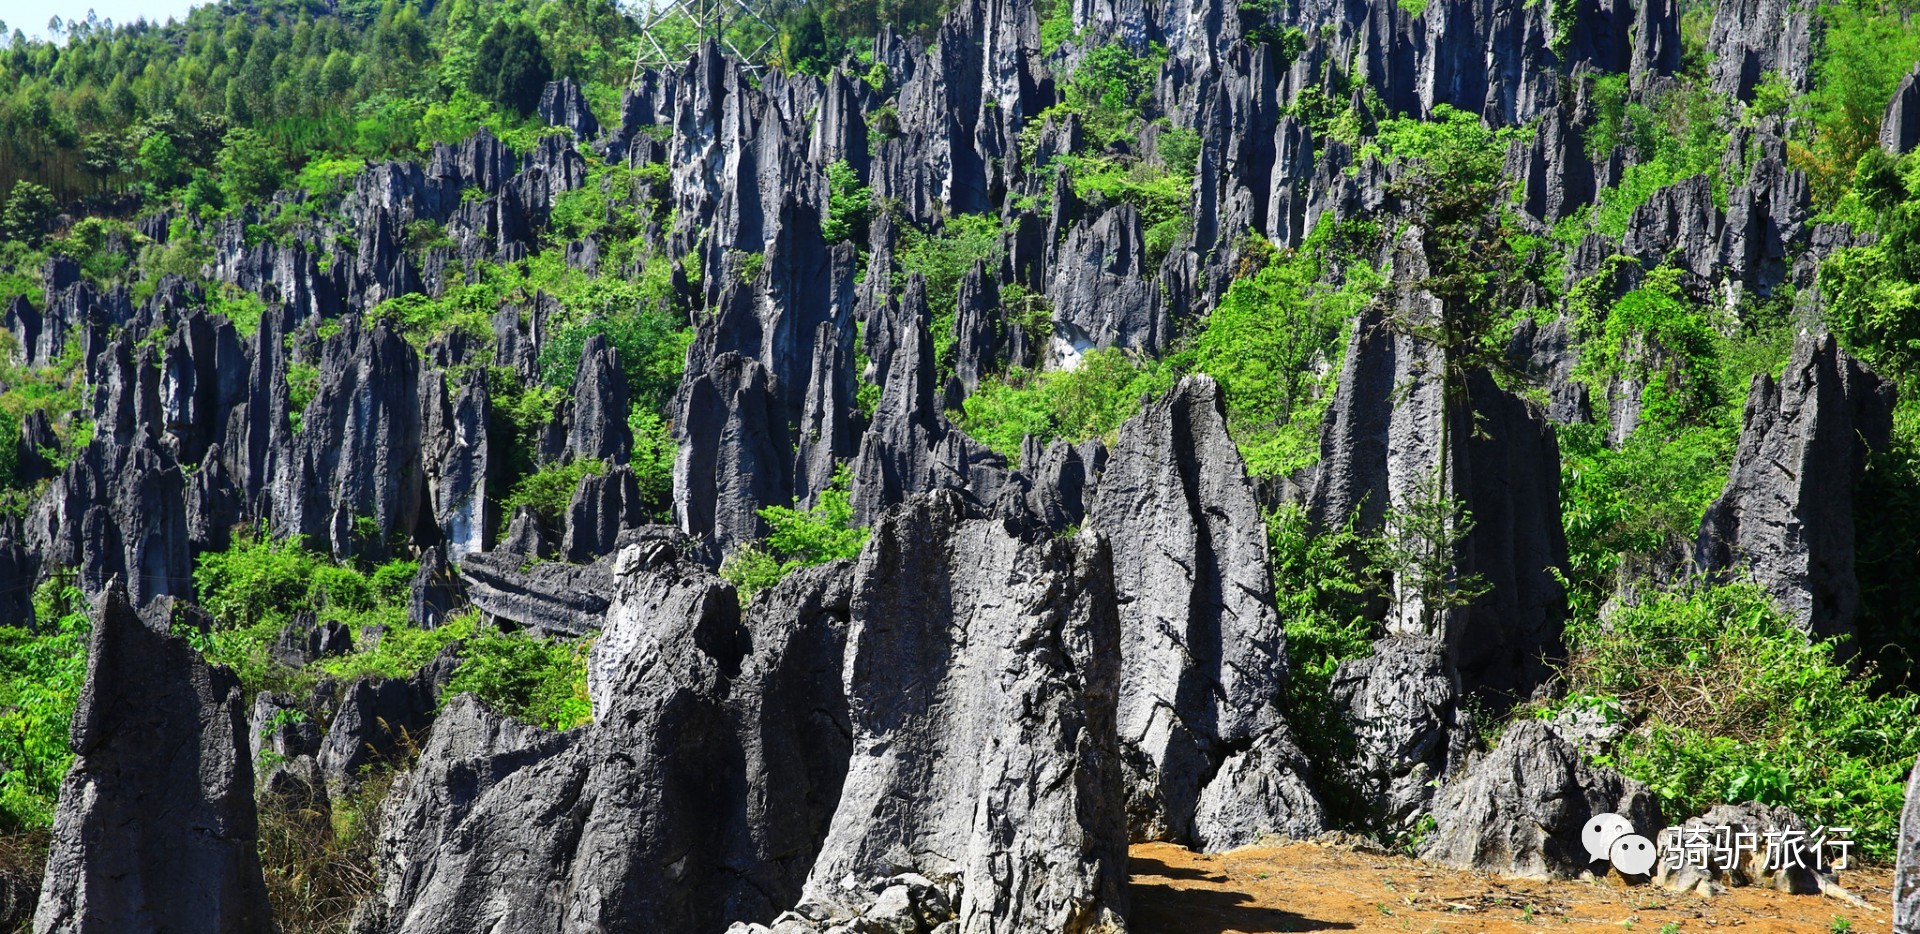 hawserli hawserli 贵州有一片石头组成的林子叫做 泥凼石林 石峰耸立